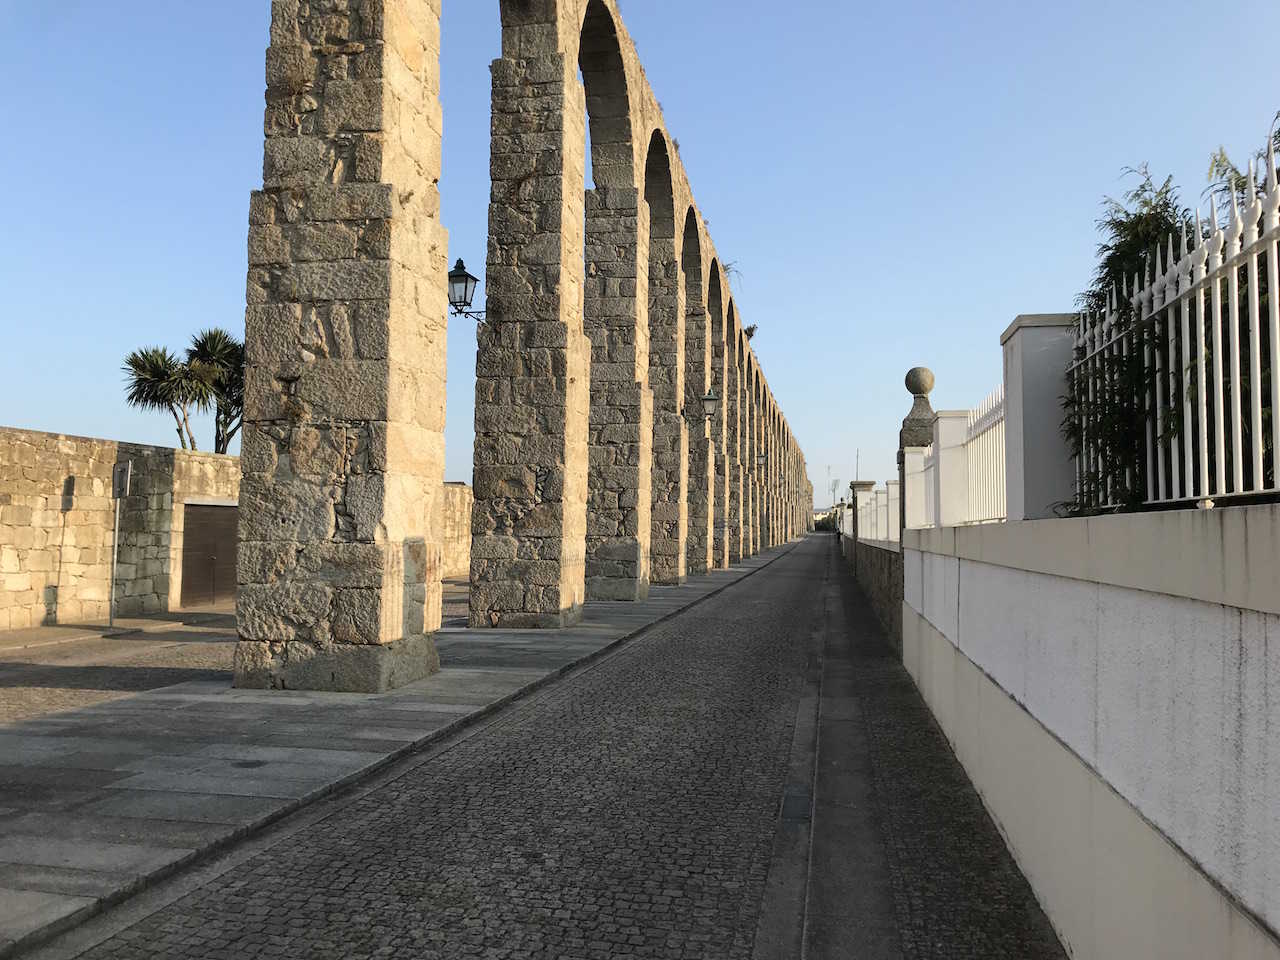 Santa Clara akvædukt i Portugal